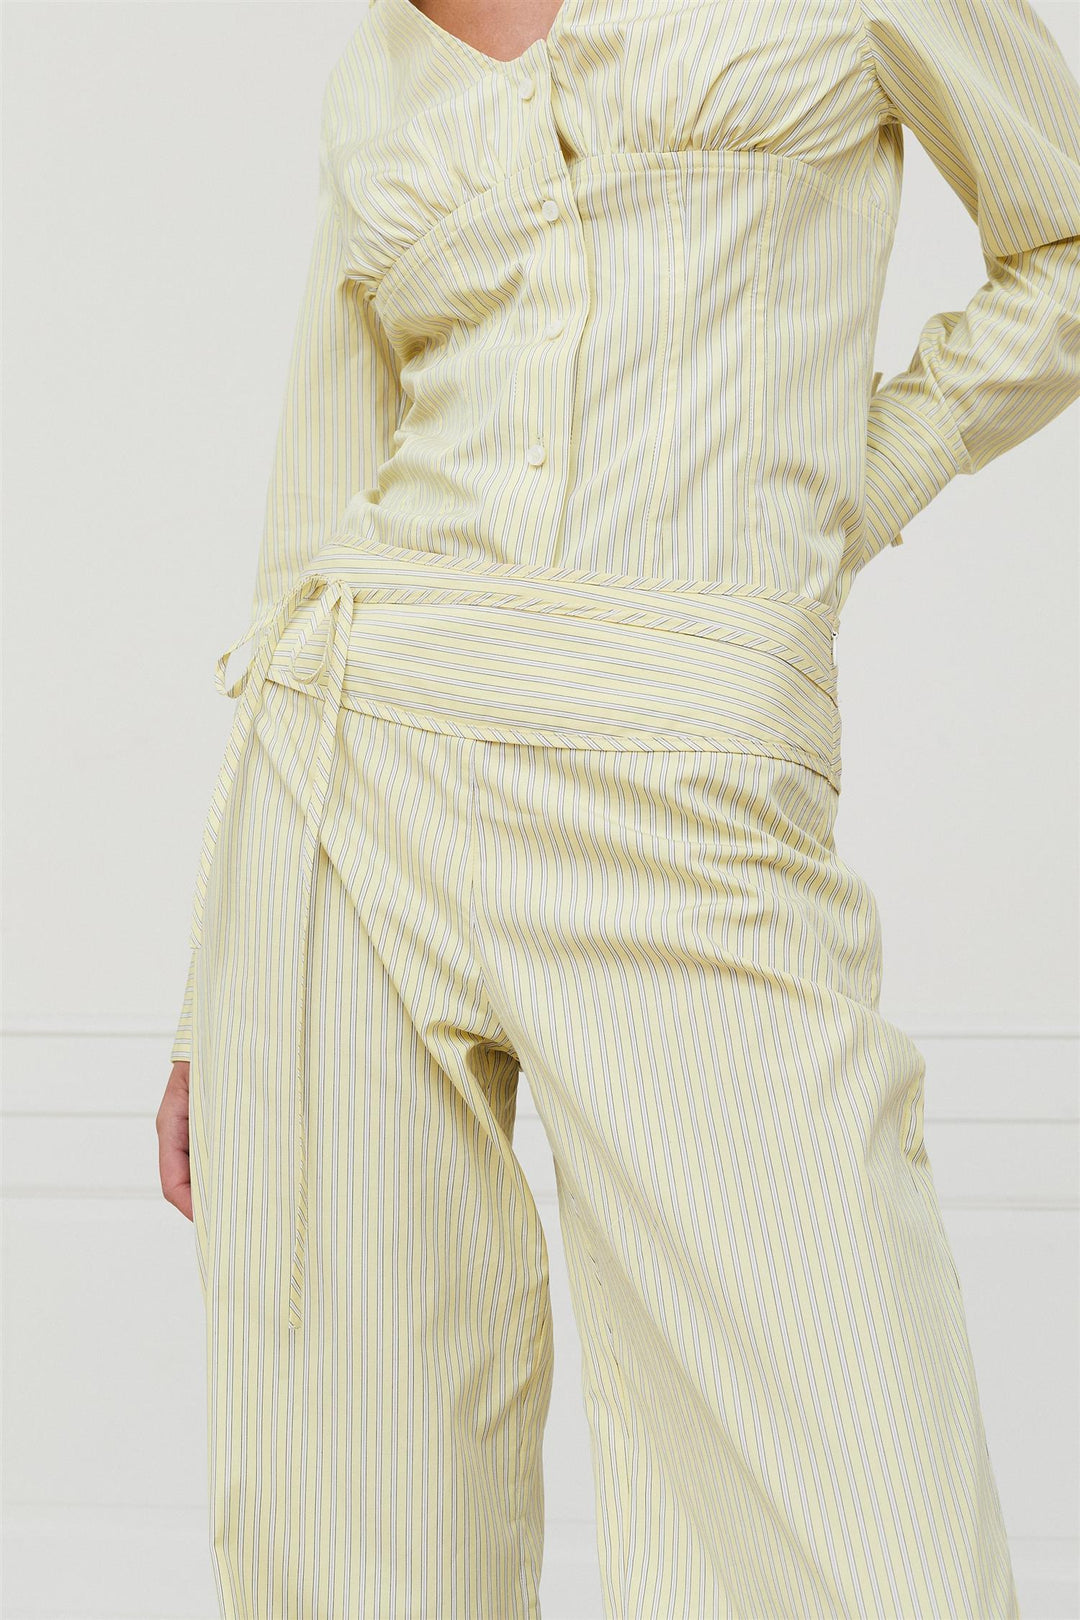 Elizabeth Pants Muted Yellow Stripe